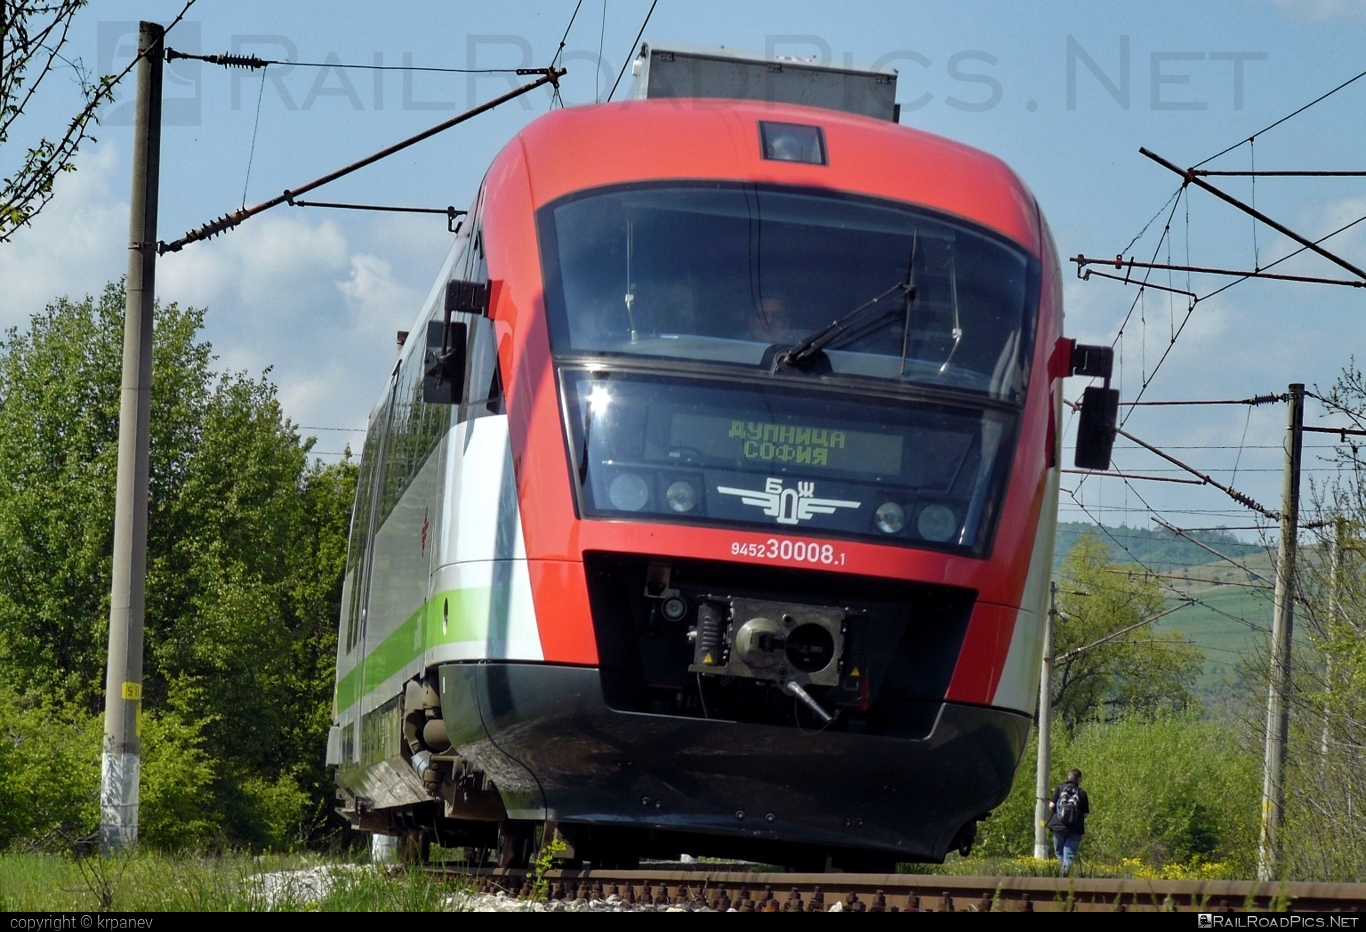 Siemens Desiro Classic - 30008.1 operated by Chemin de fer de l'Etat bulgare - Bulgarski Durzhavni Zheleznitsi #bdz #desiro #desiroclassic #siemens #siemensdesiro #siemensdesiroclassic